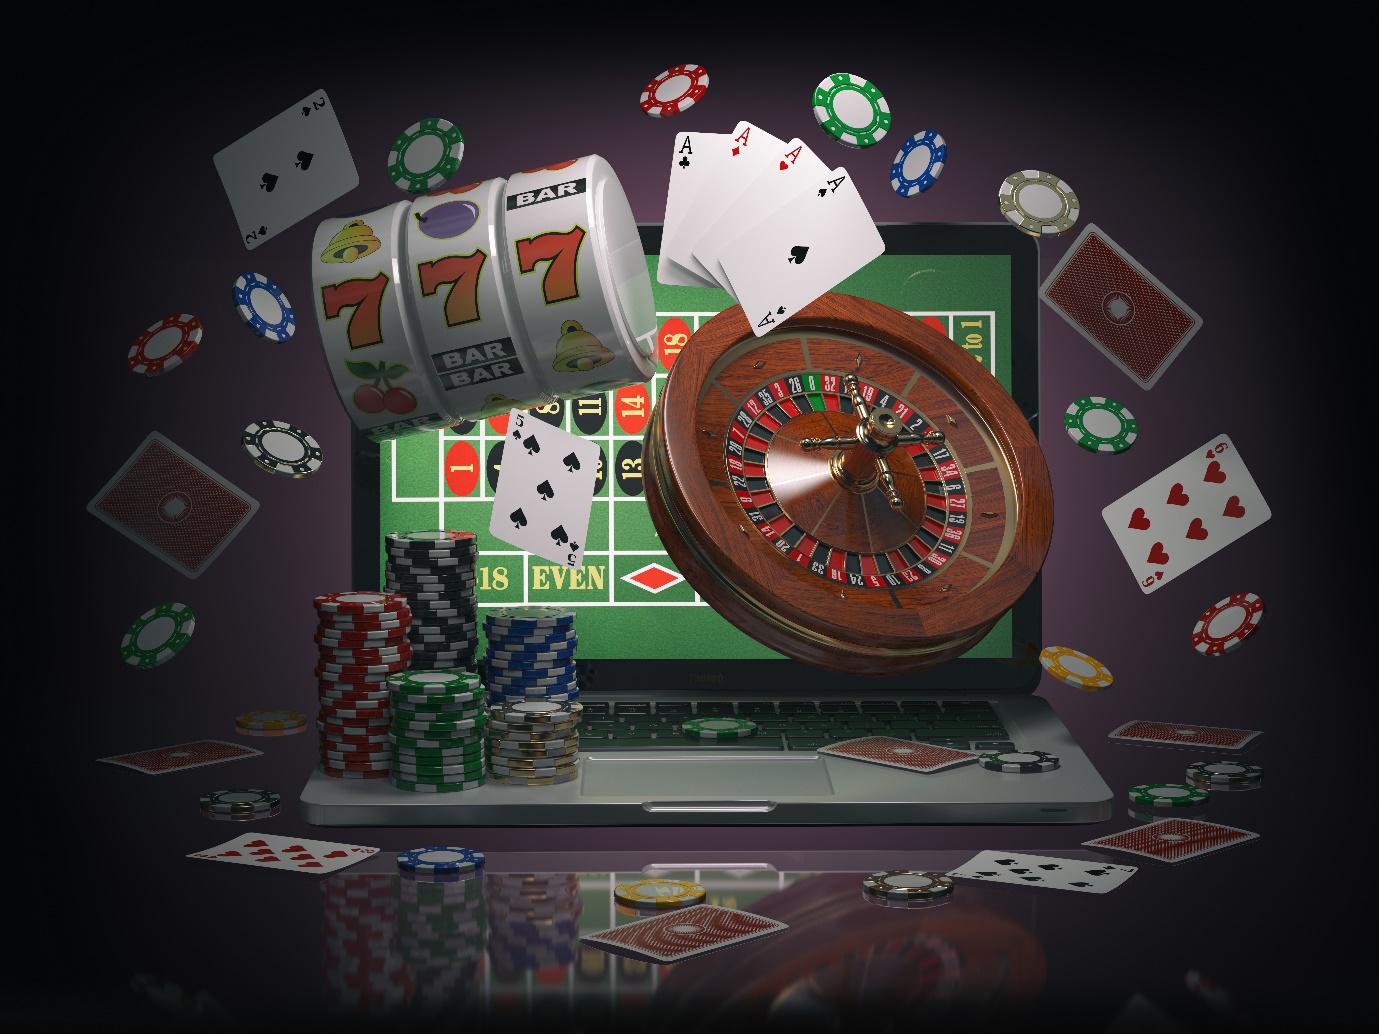 5 Best Ways To Sell casino online